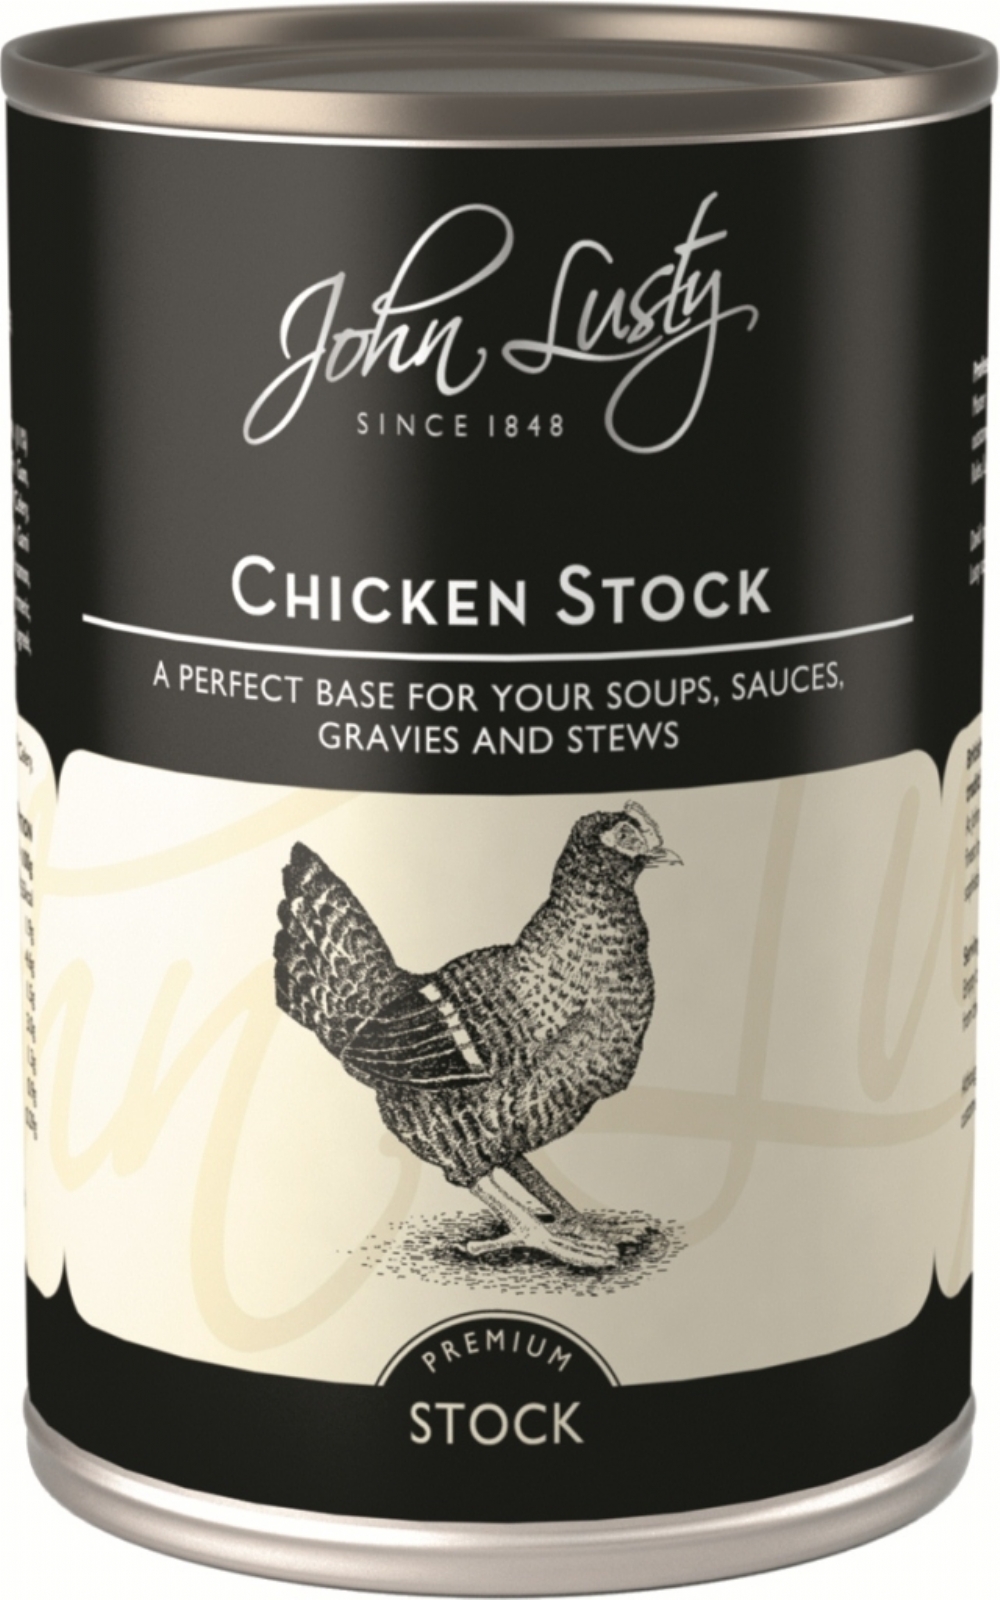 JOHN LUSTY Chicken Stock 392g